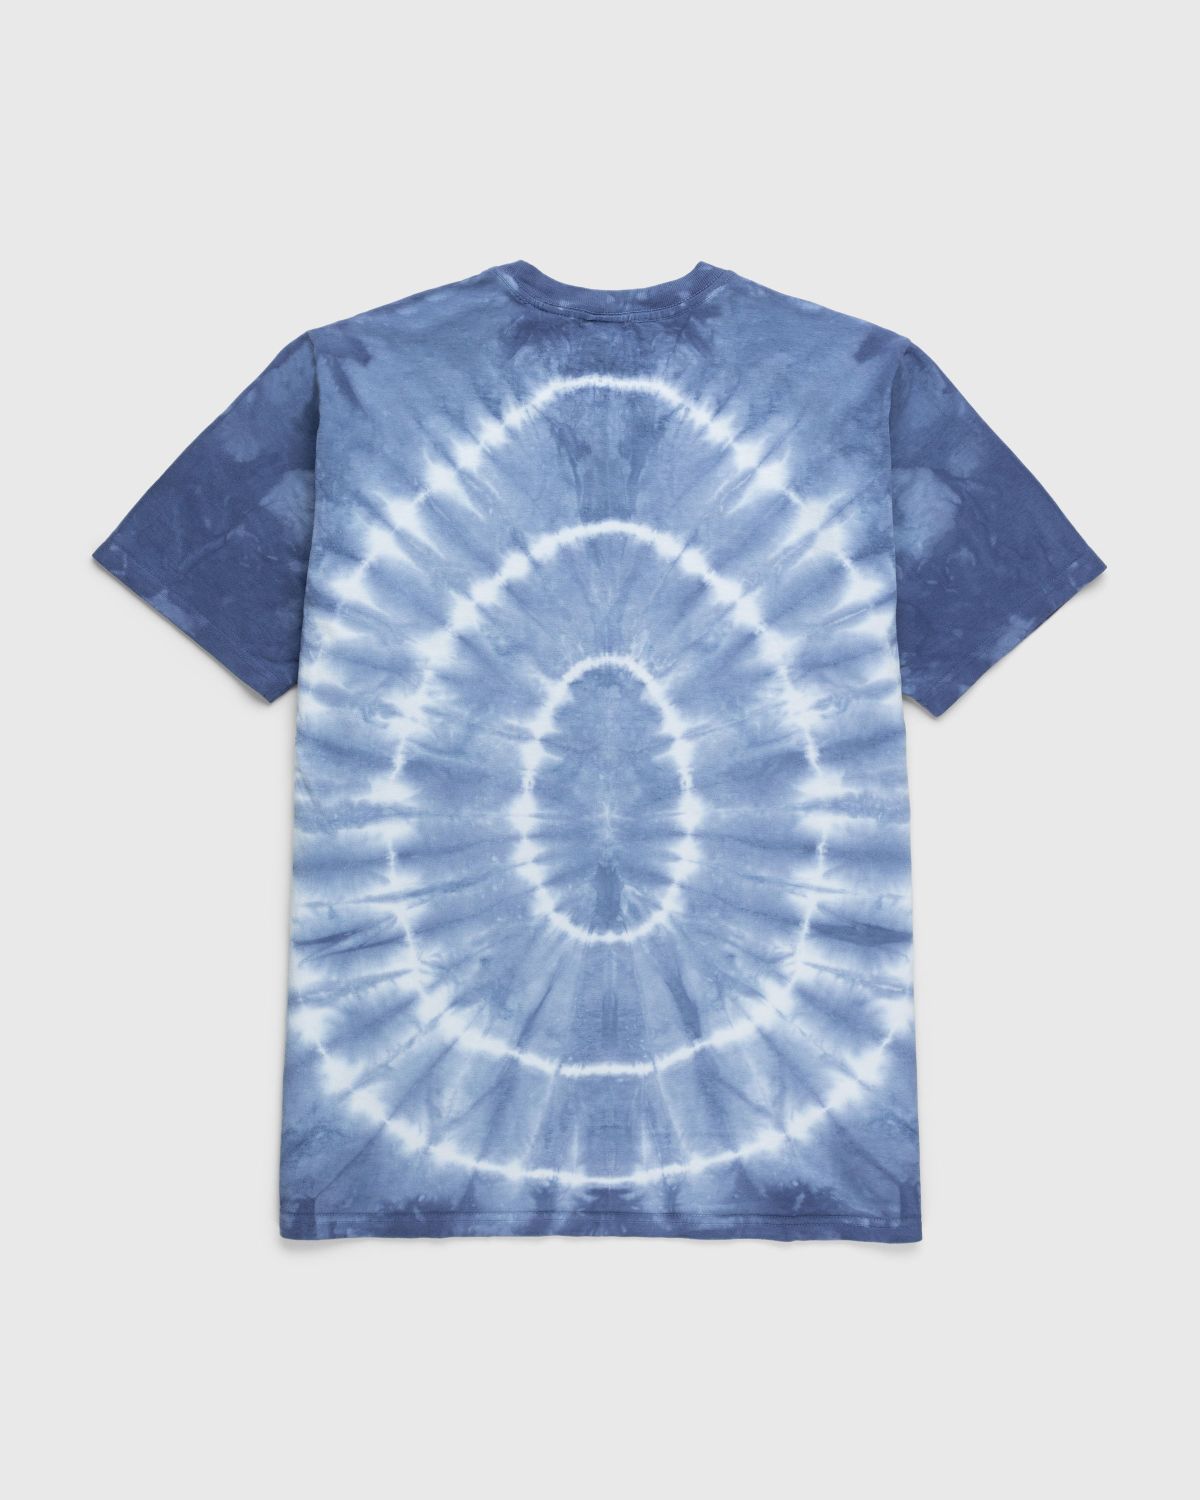 Stüssy x Dries van Noten – Tie-Dye Tee - T-shirts - Blue - Image 2